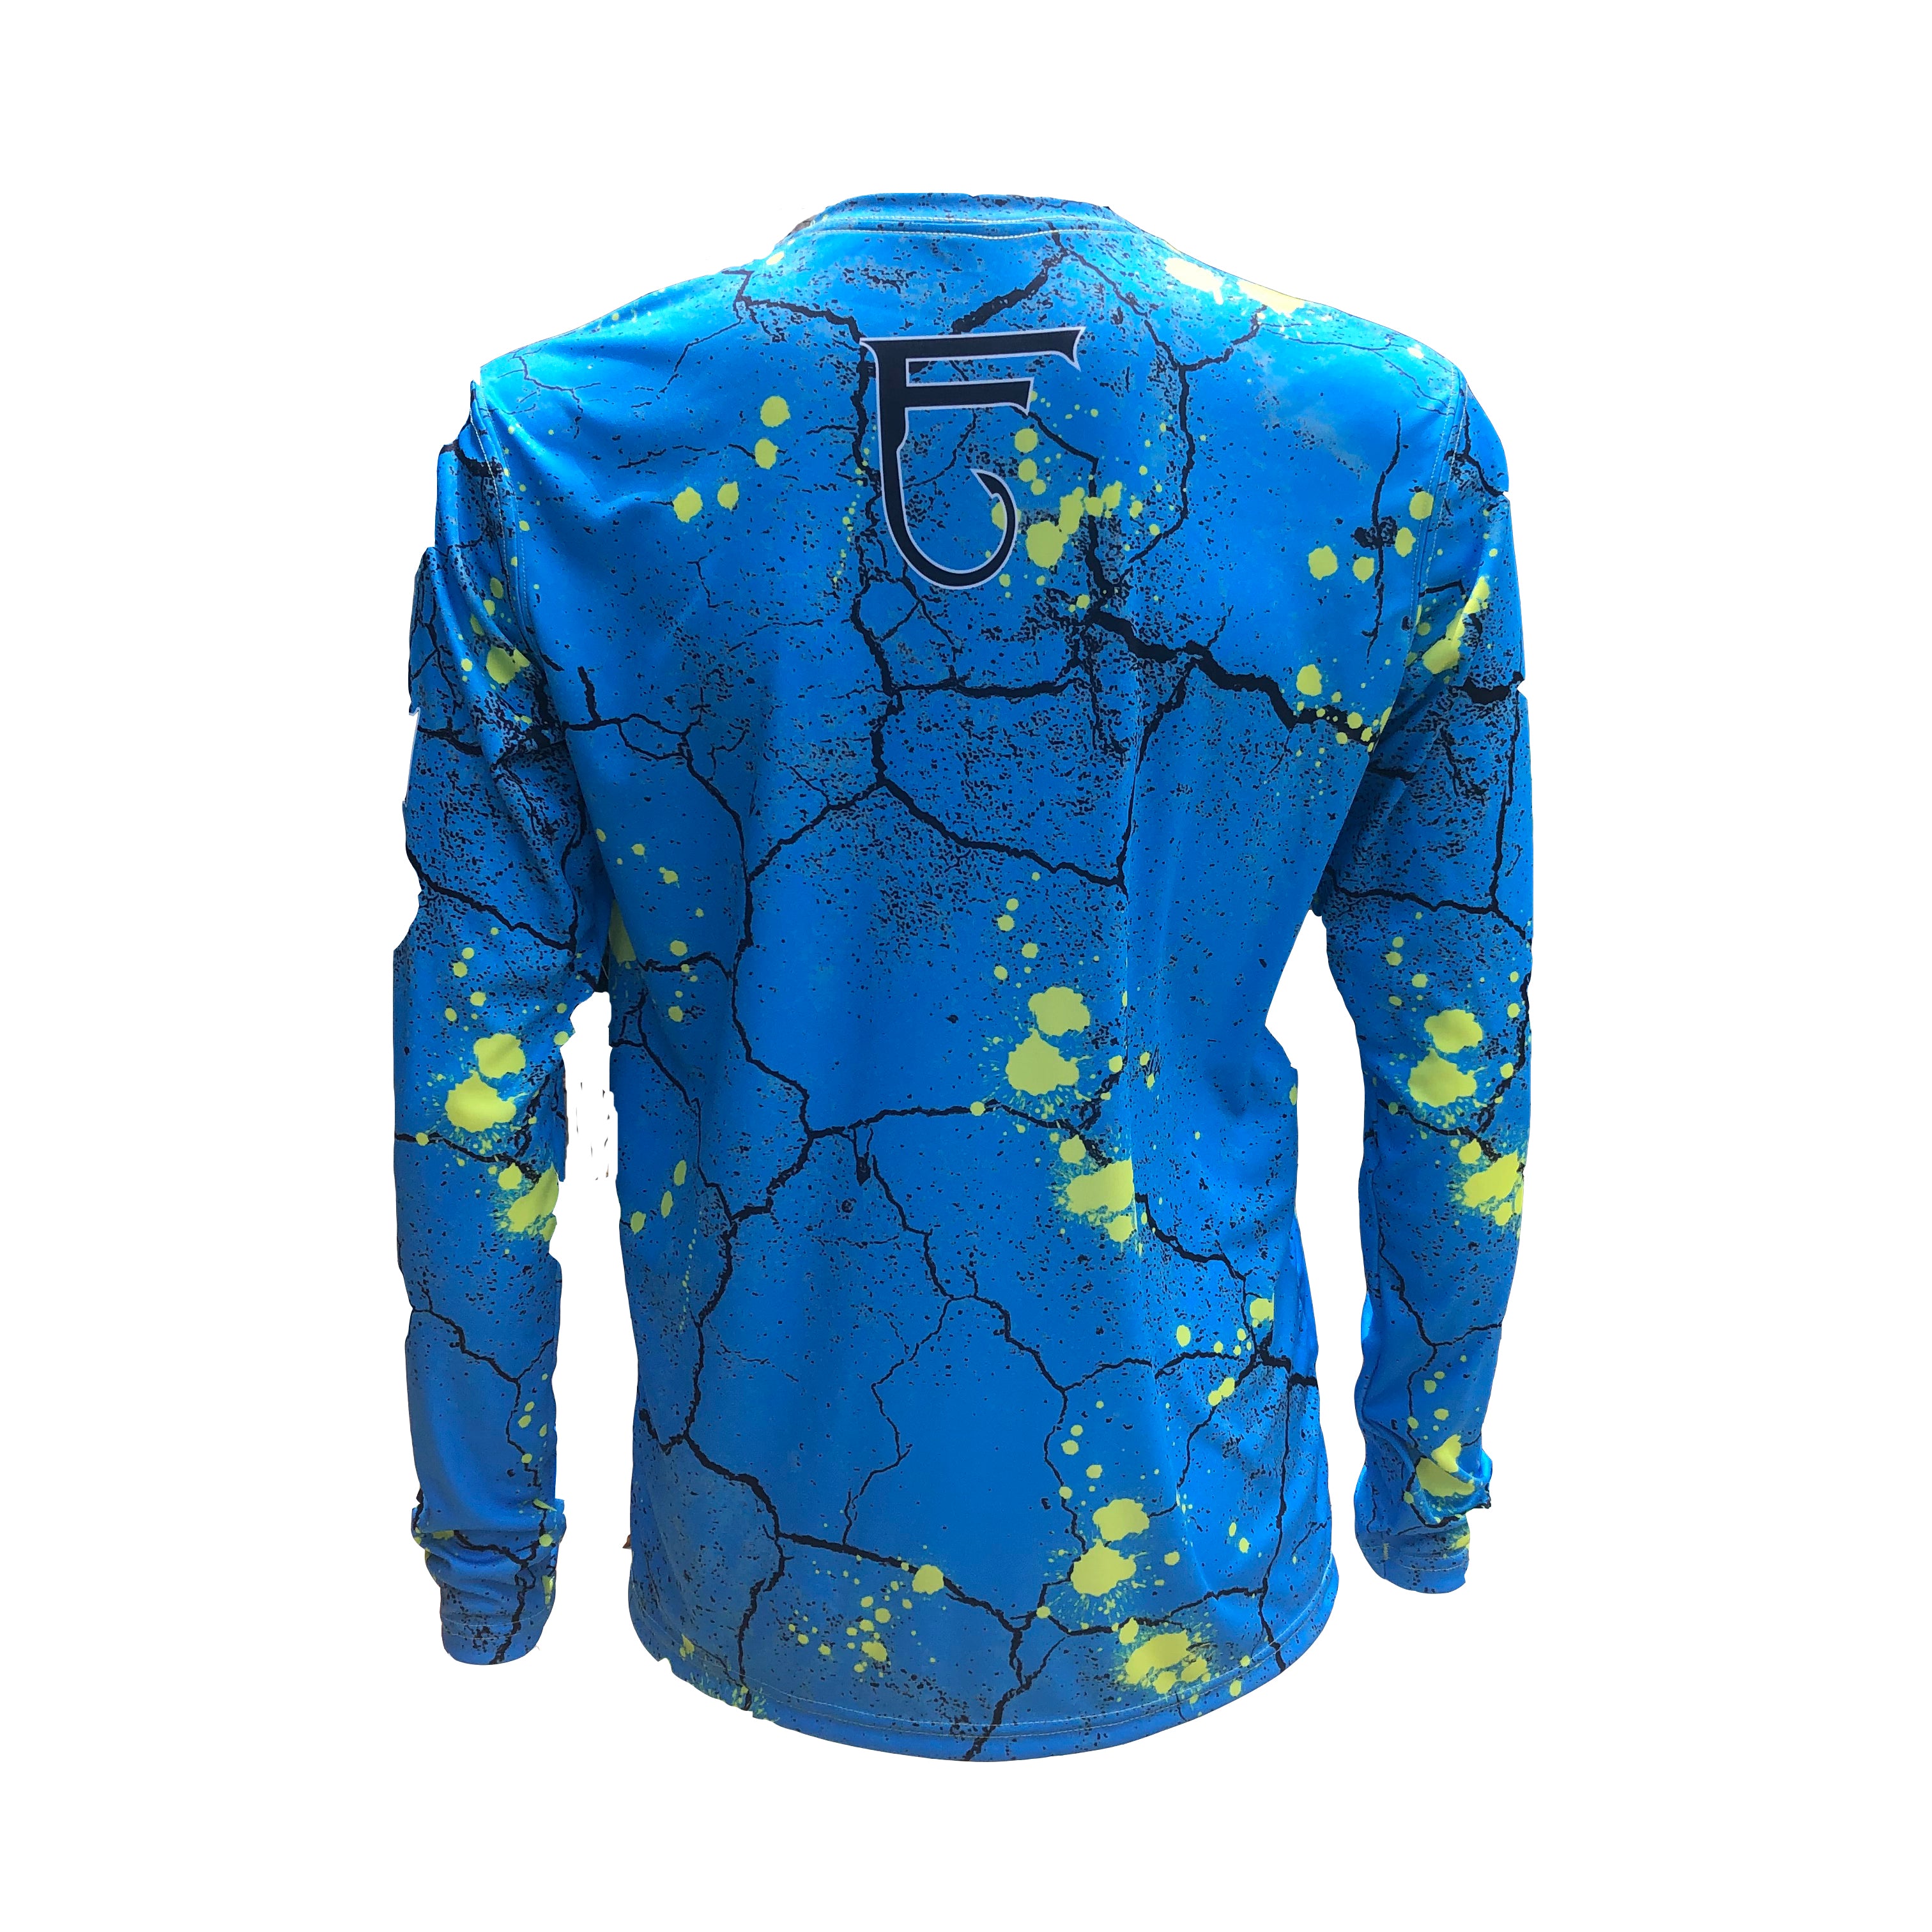 Frenzy Performance Fishing Shirt - Blue Full Pattern – Freespool Gear